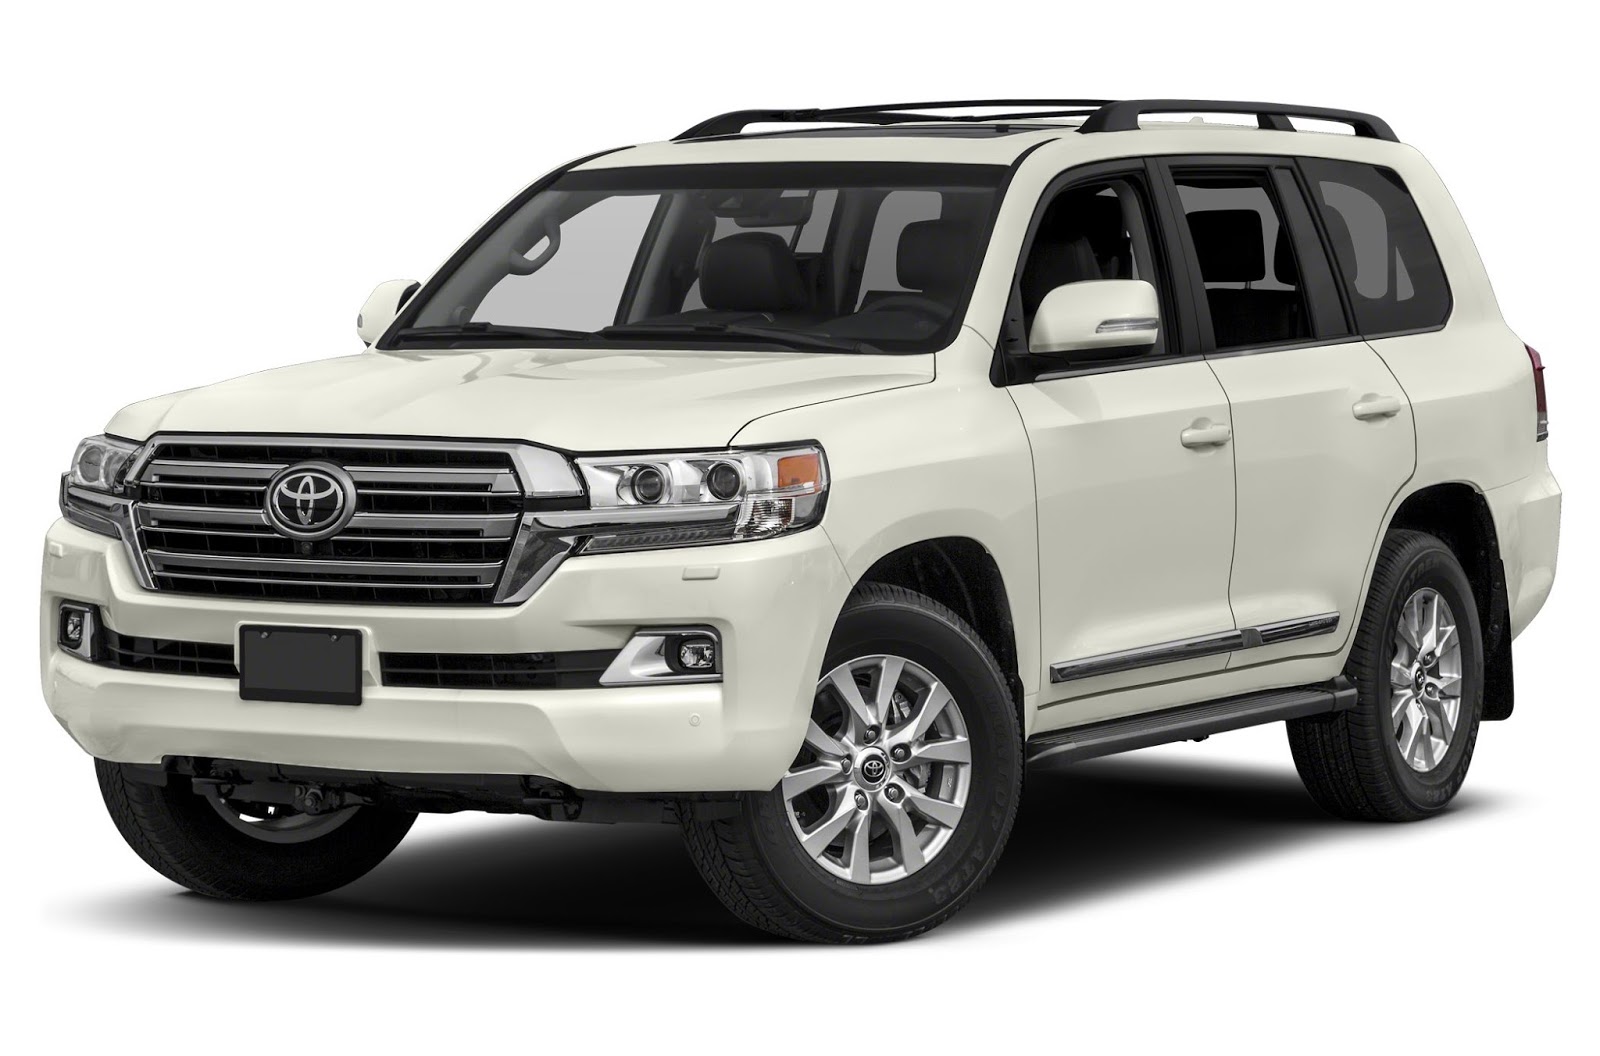 List Of Toyota Land Cruiser Types Price List Philippines Latest